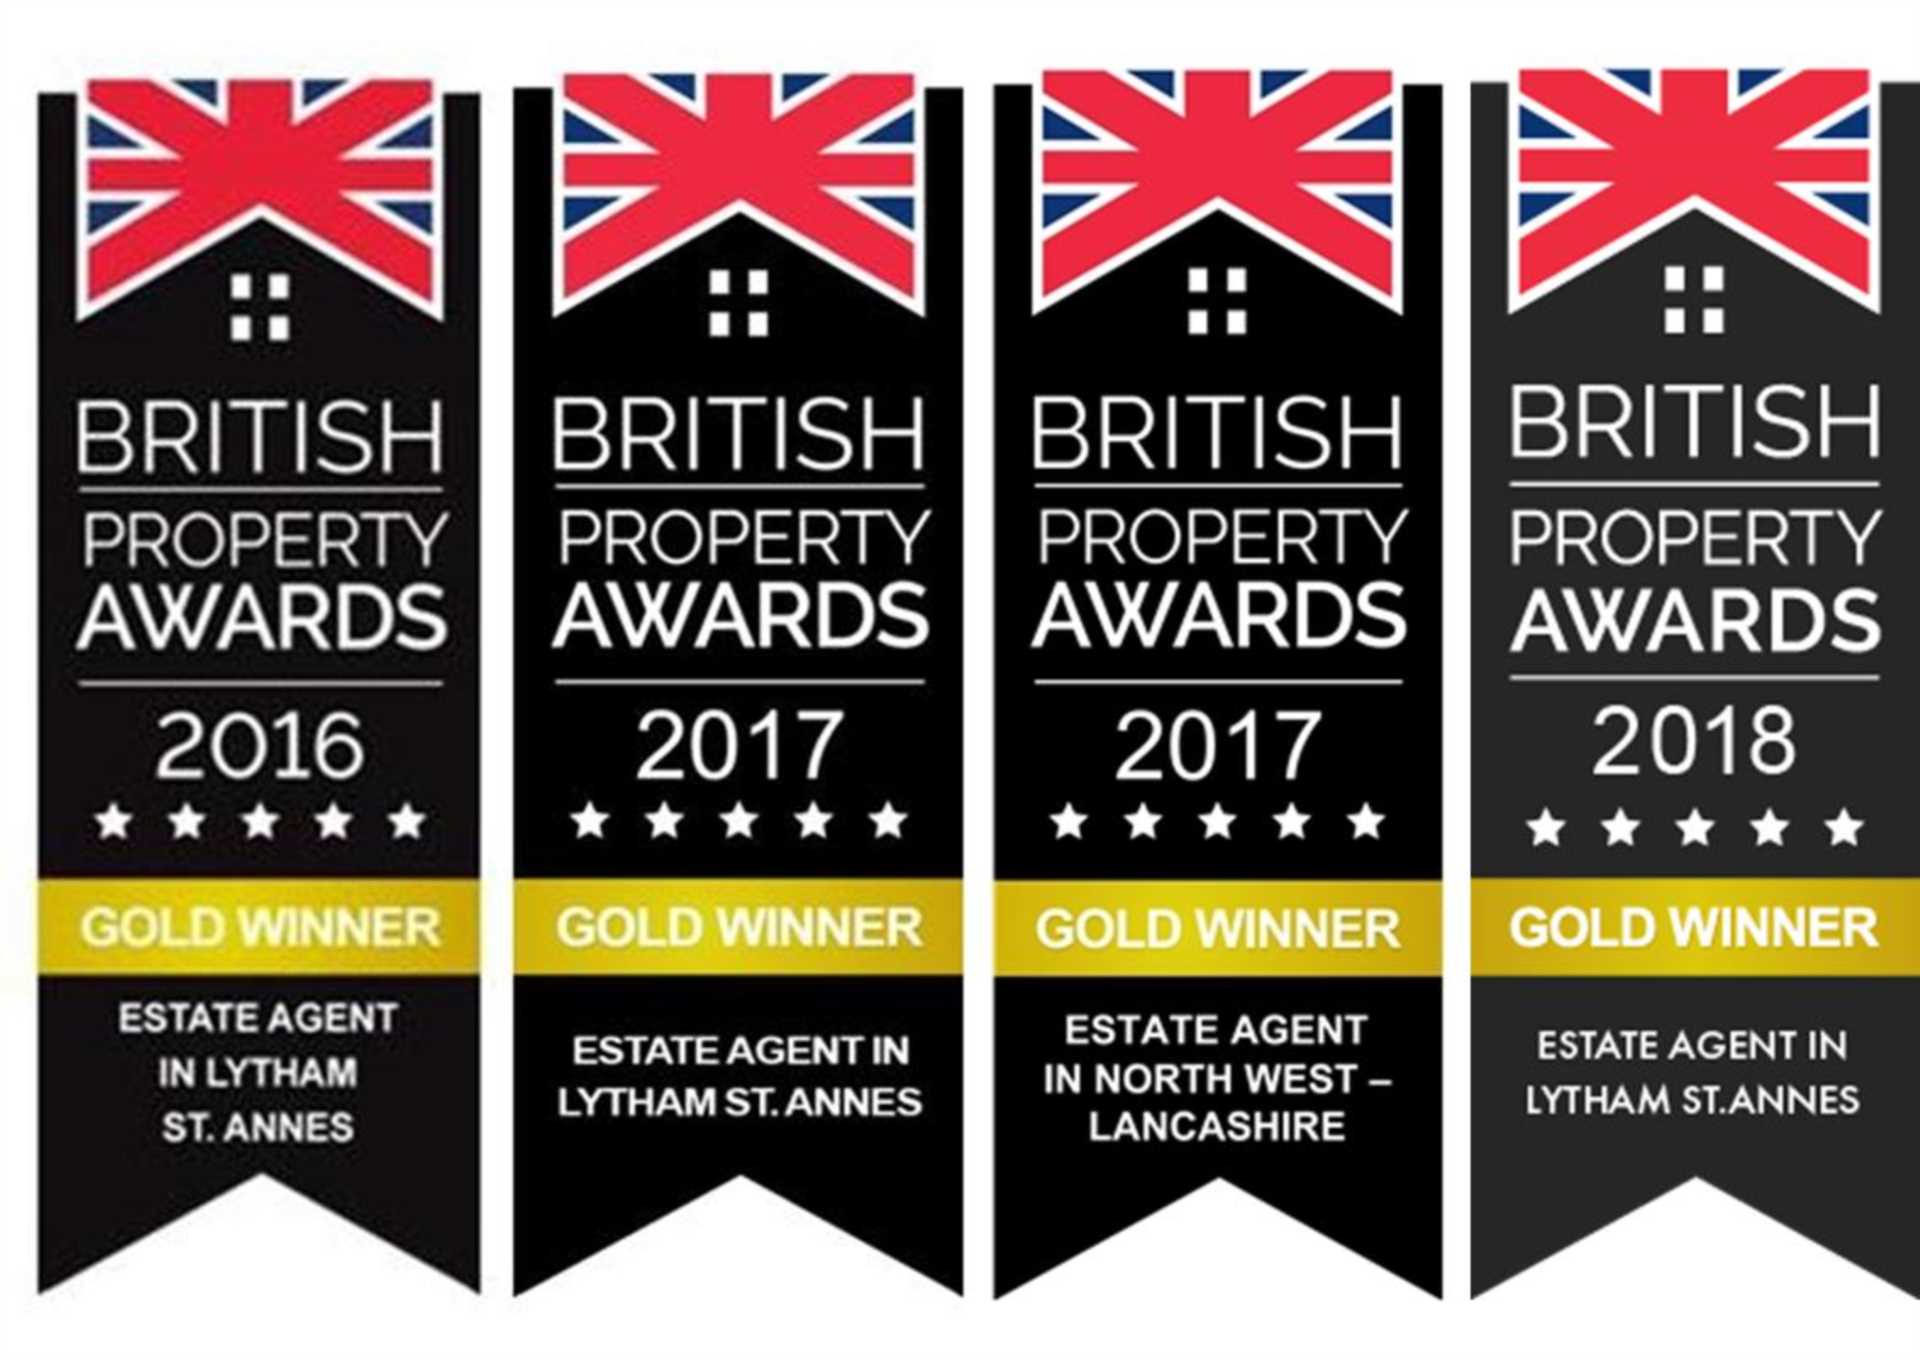 British Property Award Gold Winners 2018 Lytham St. Annes